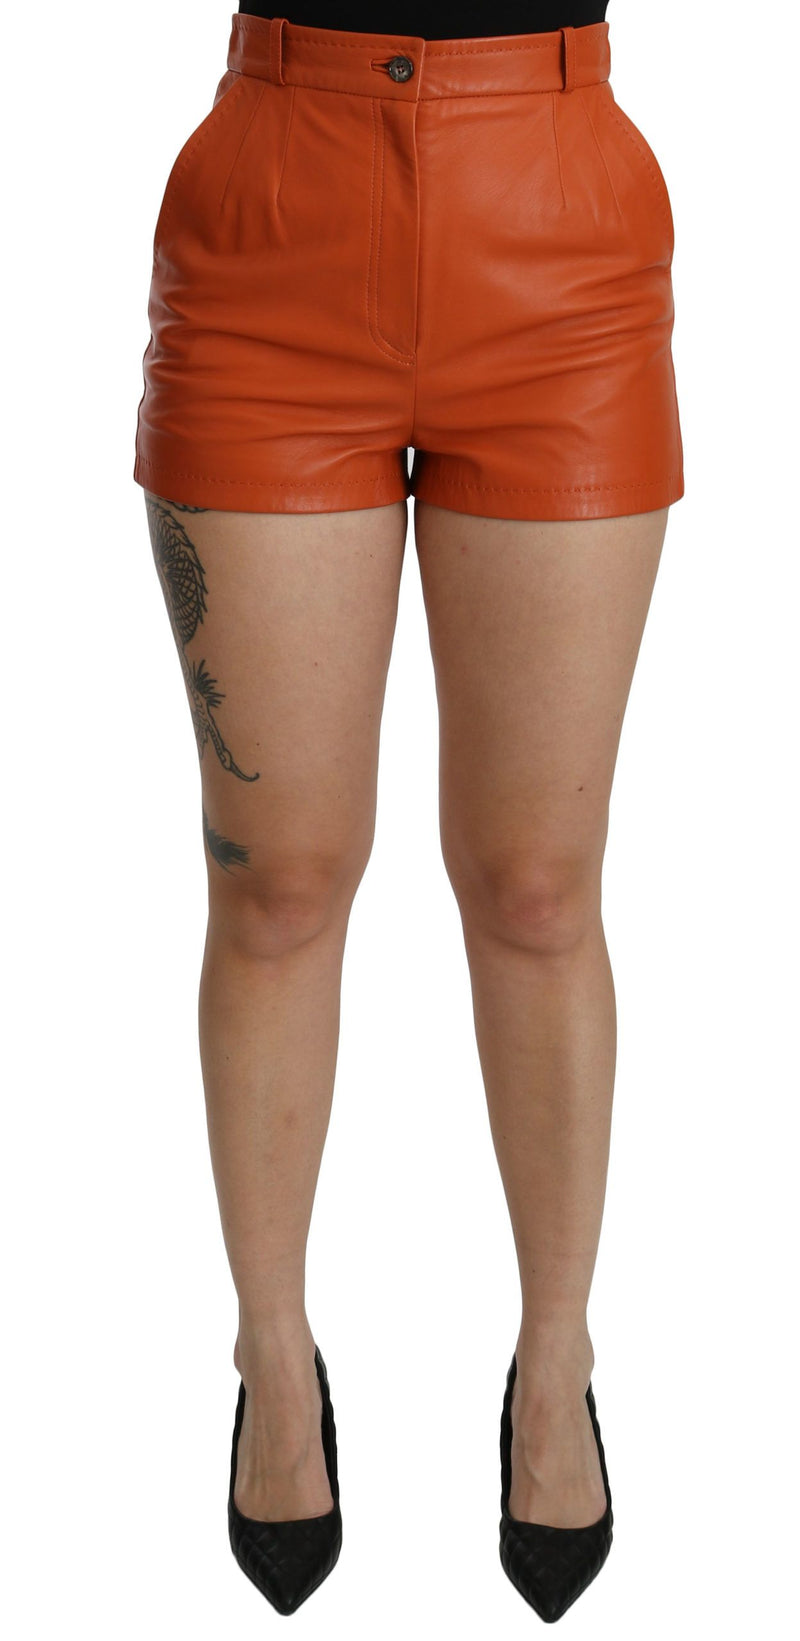 Dolce & Gabbana Chic Orange Leather High Waist Hot Women's Pants